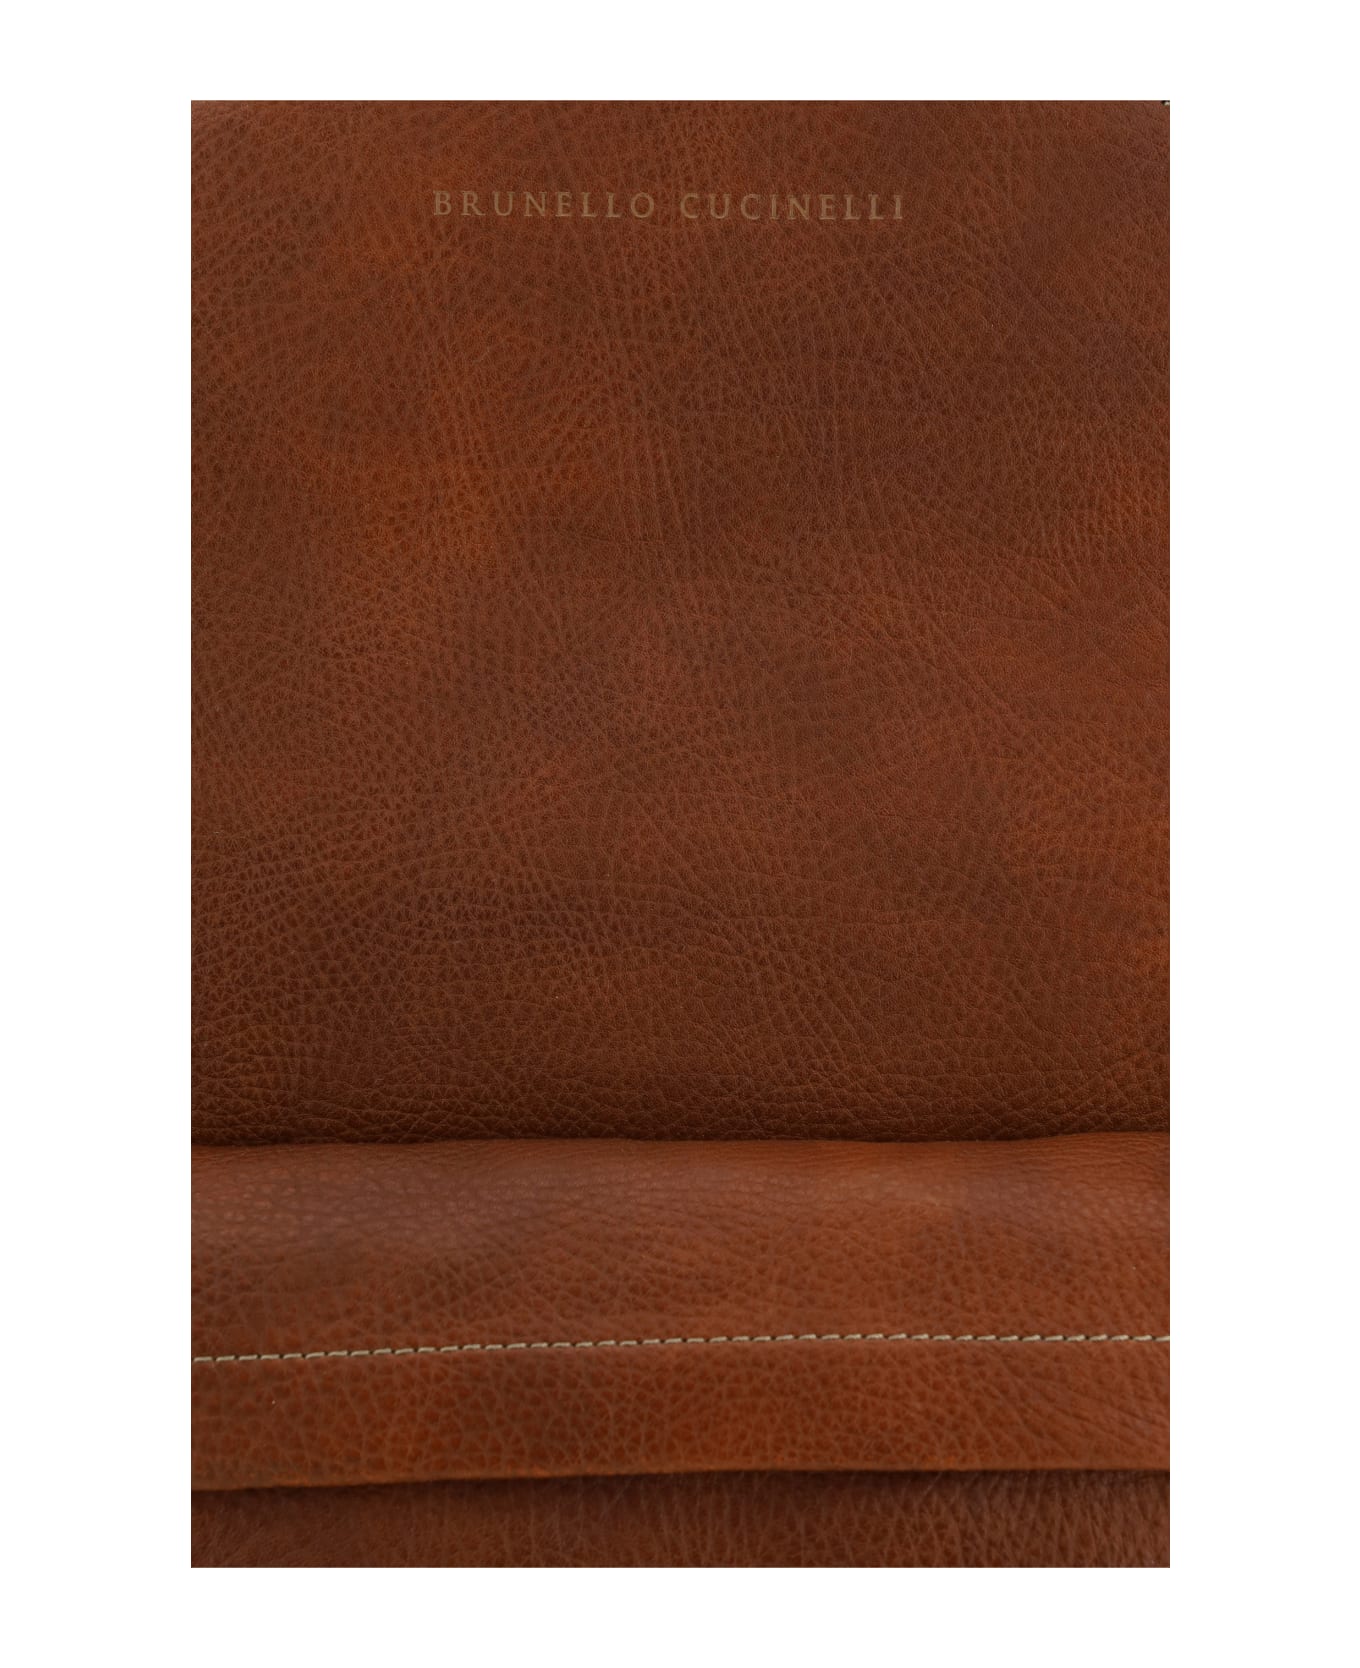 Brunello Cucinelli Backpack - BROWN